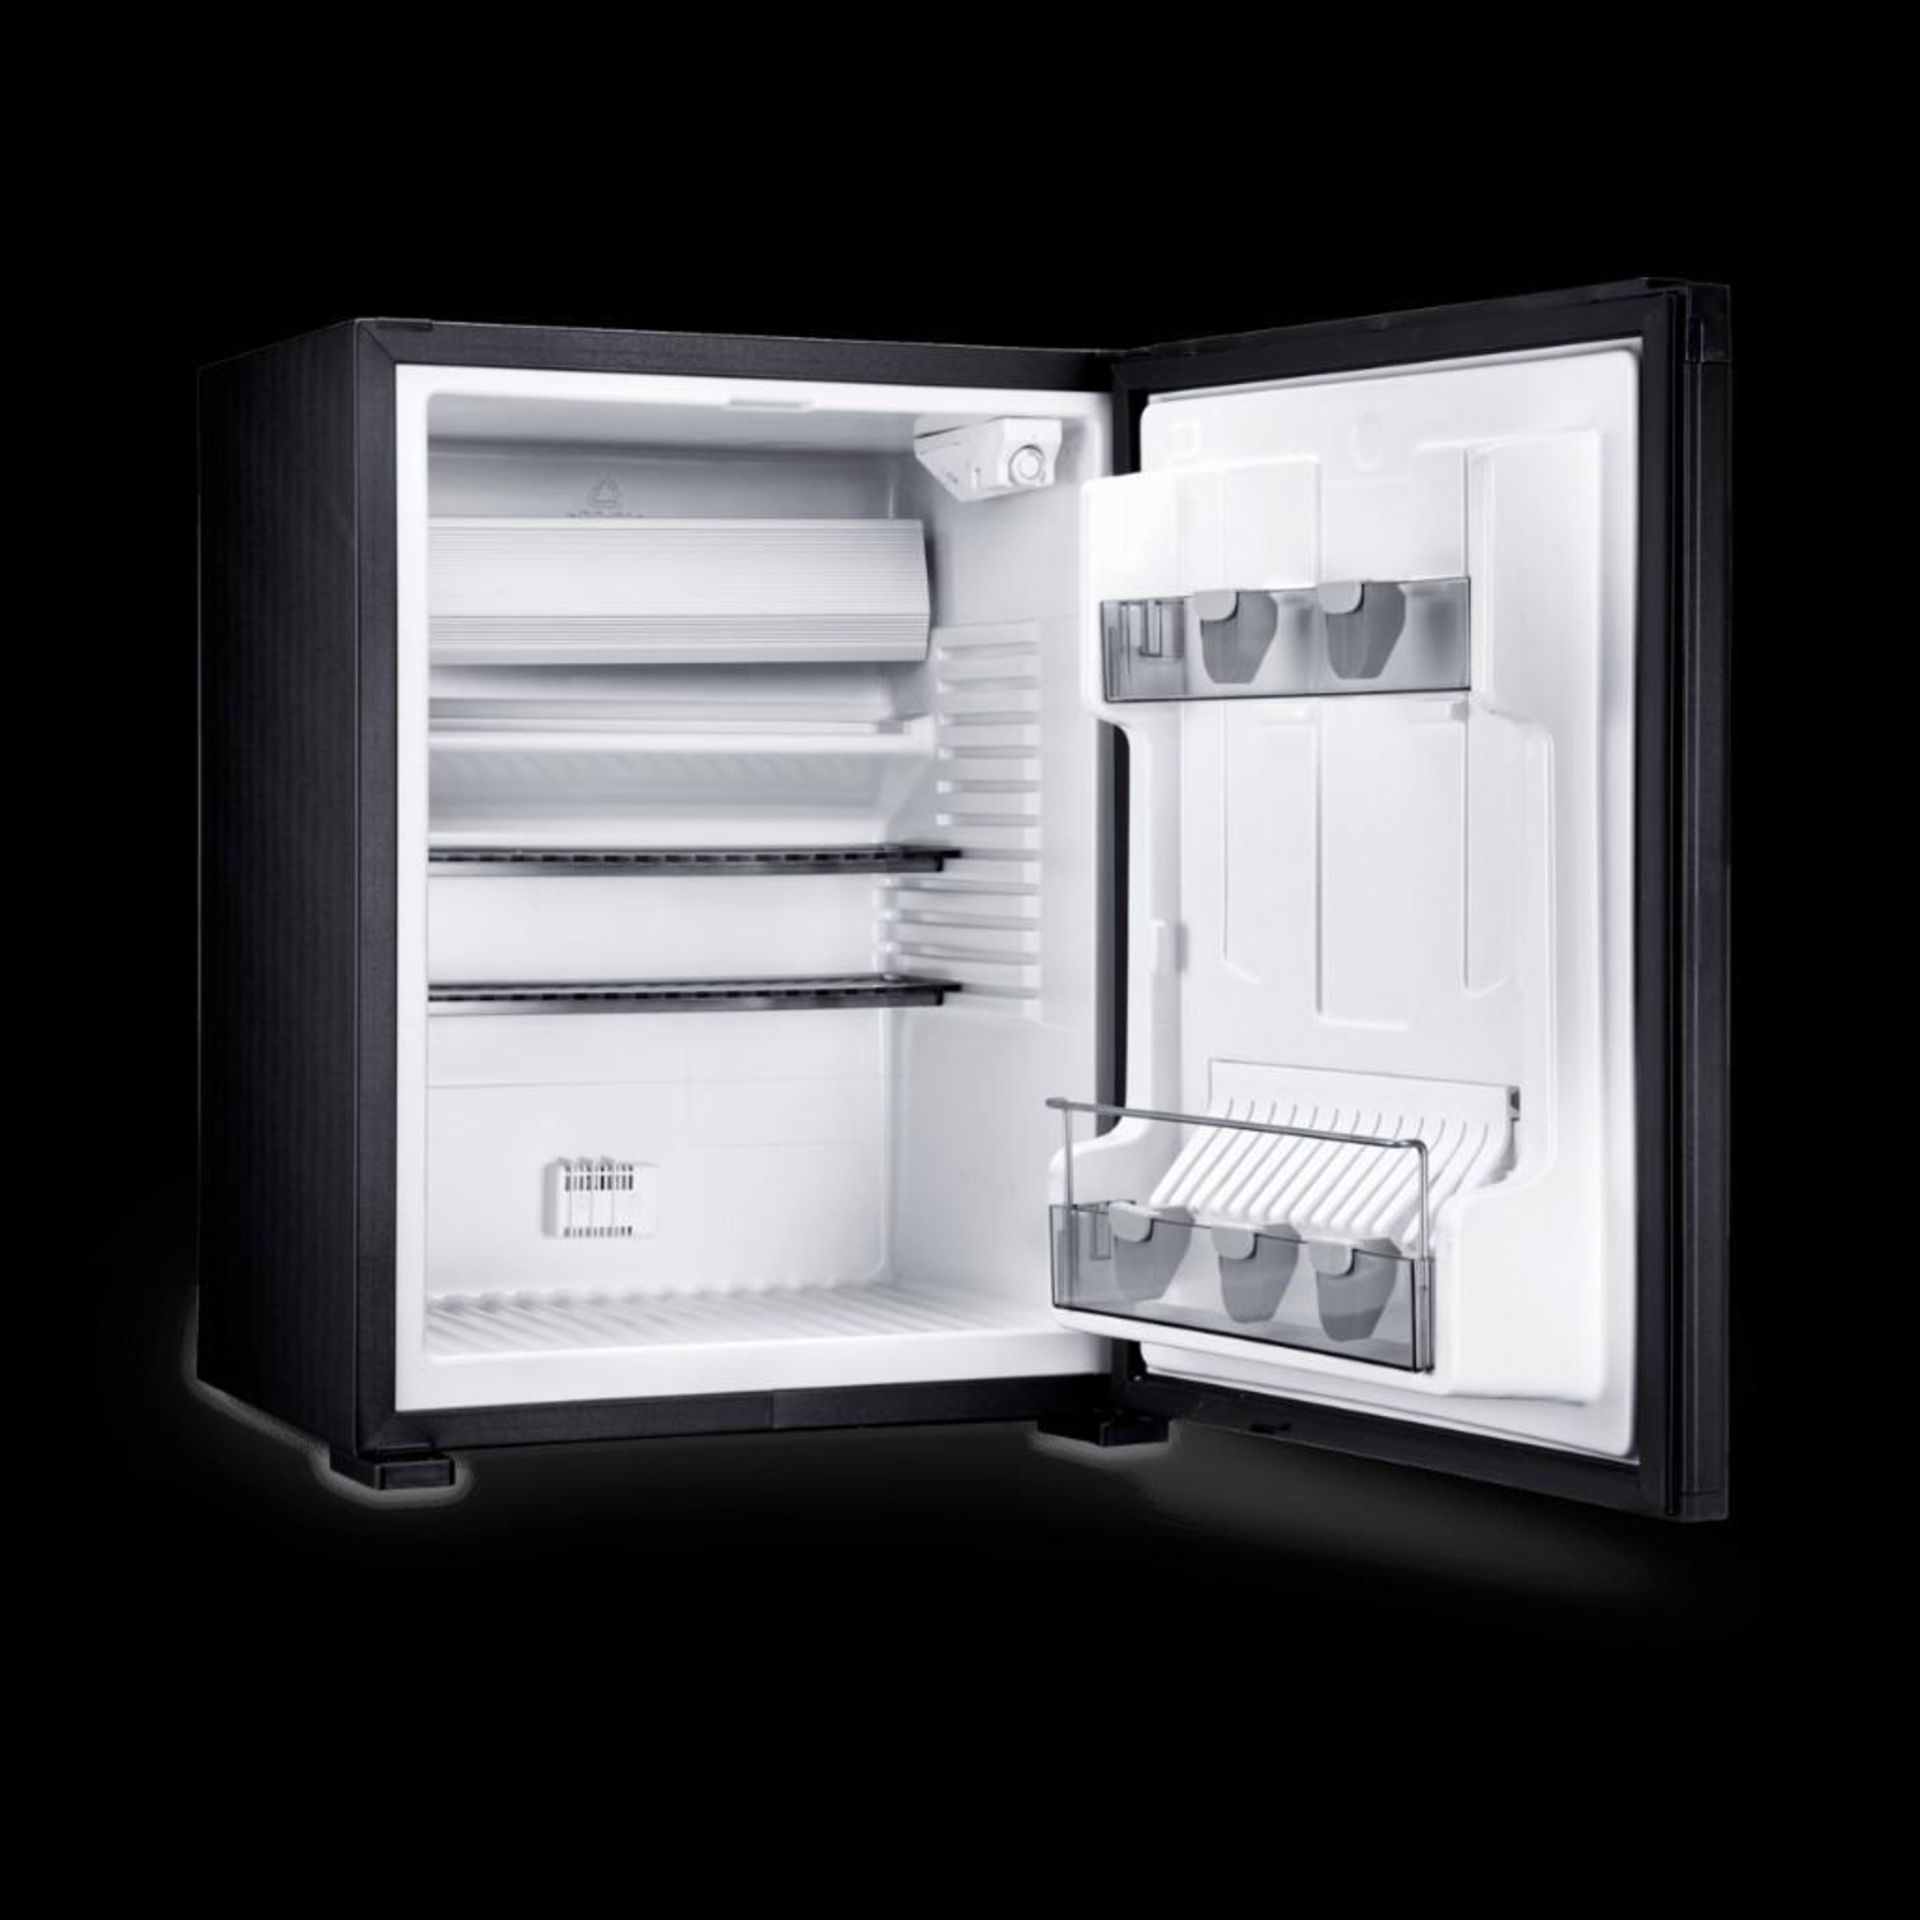 Qty 3 - Dometic refrigerator. Model RH141DG. 120v, black. New in box. - Image 2 of 4